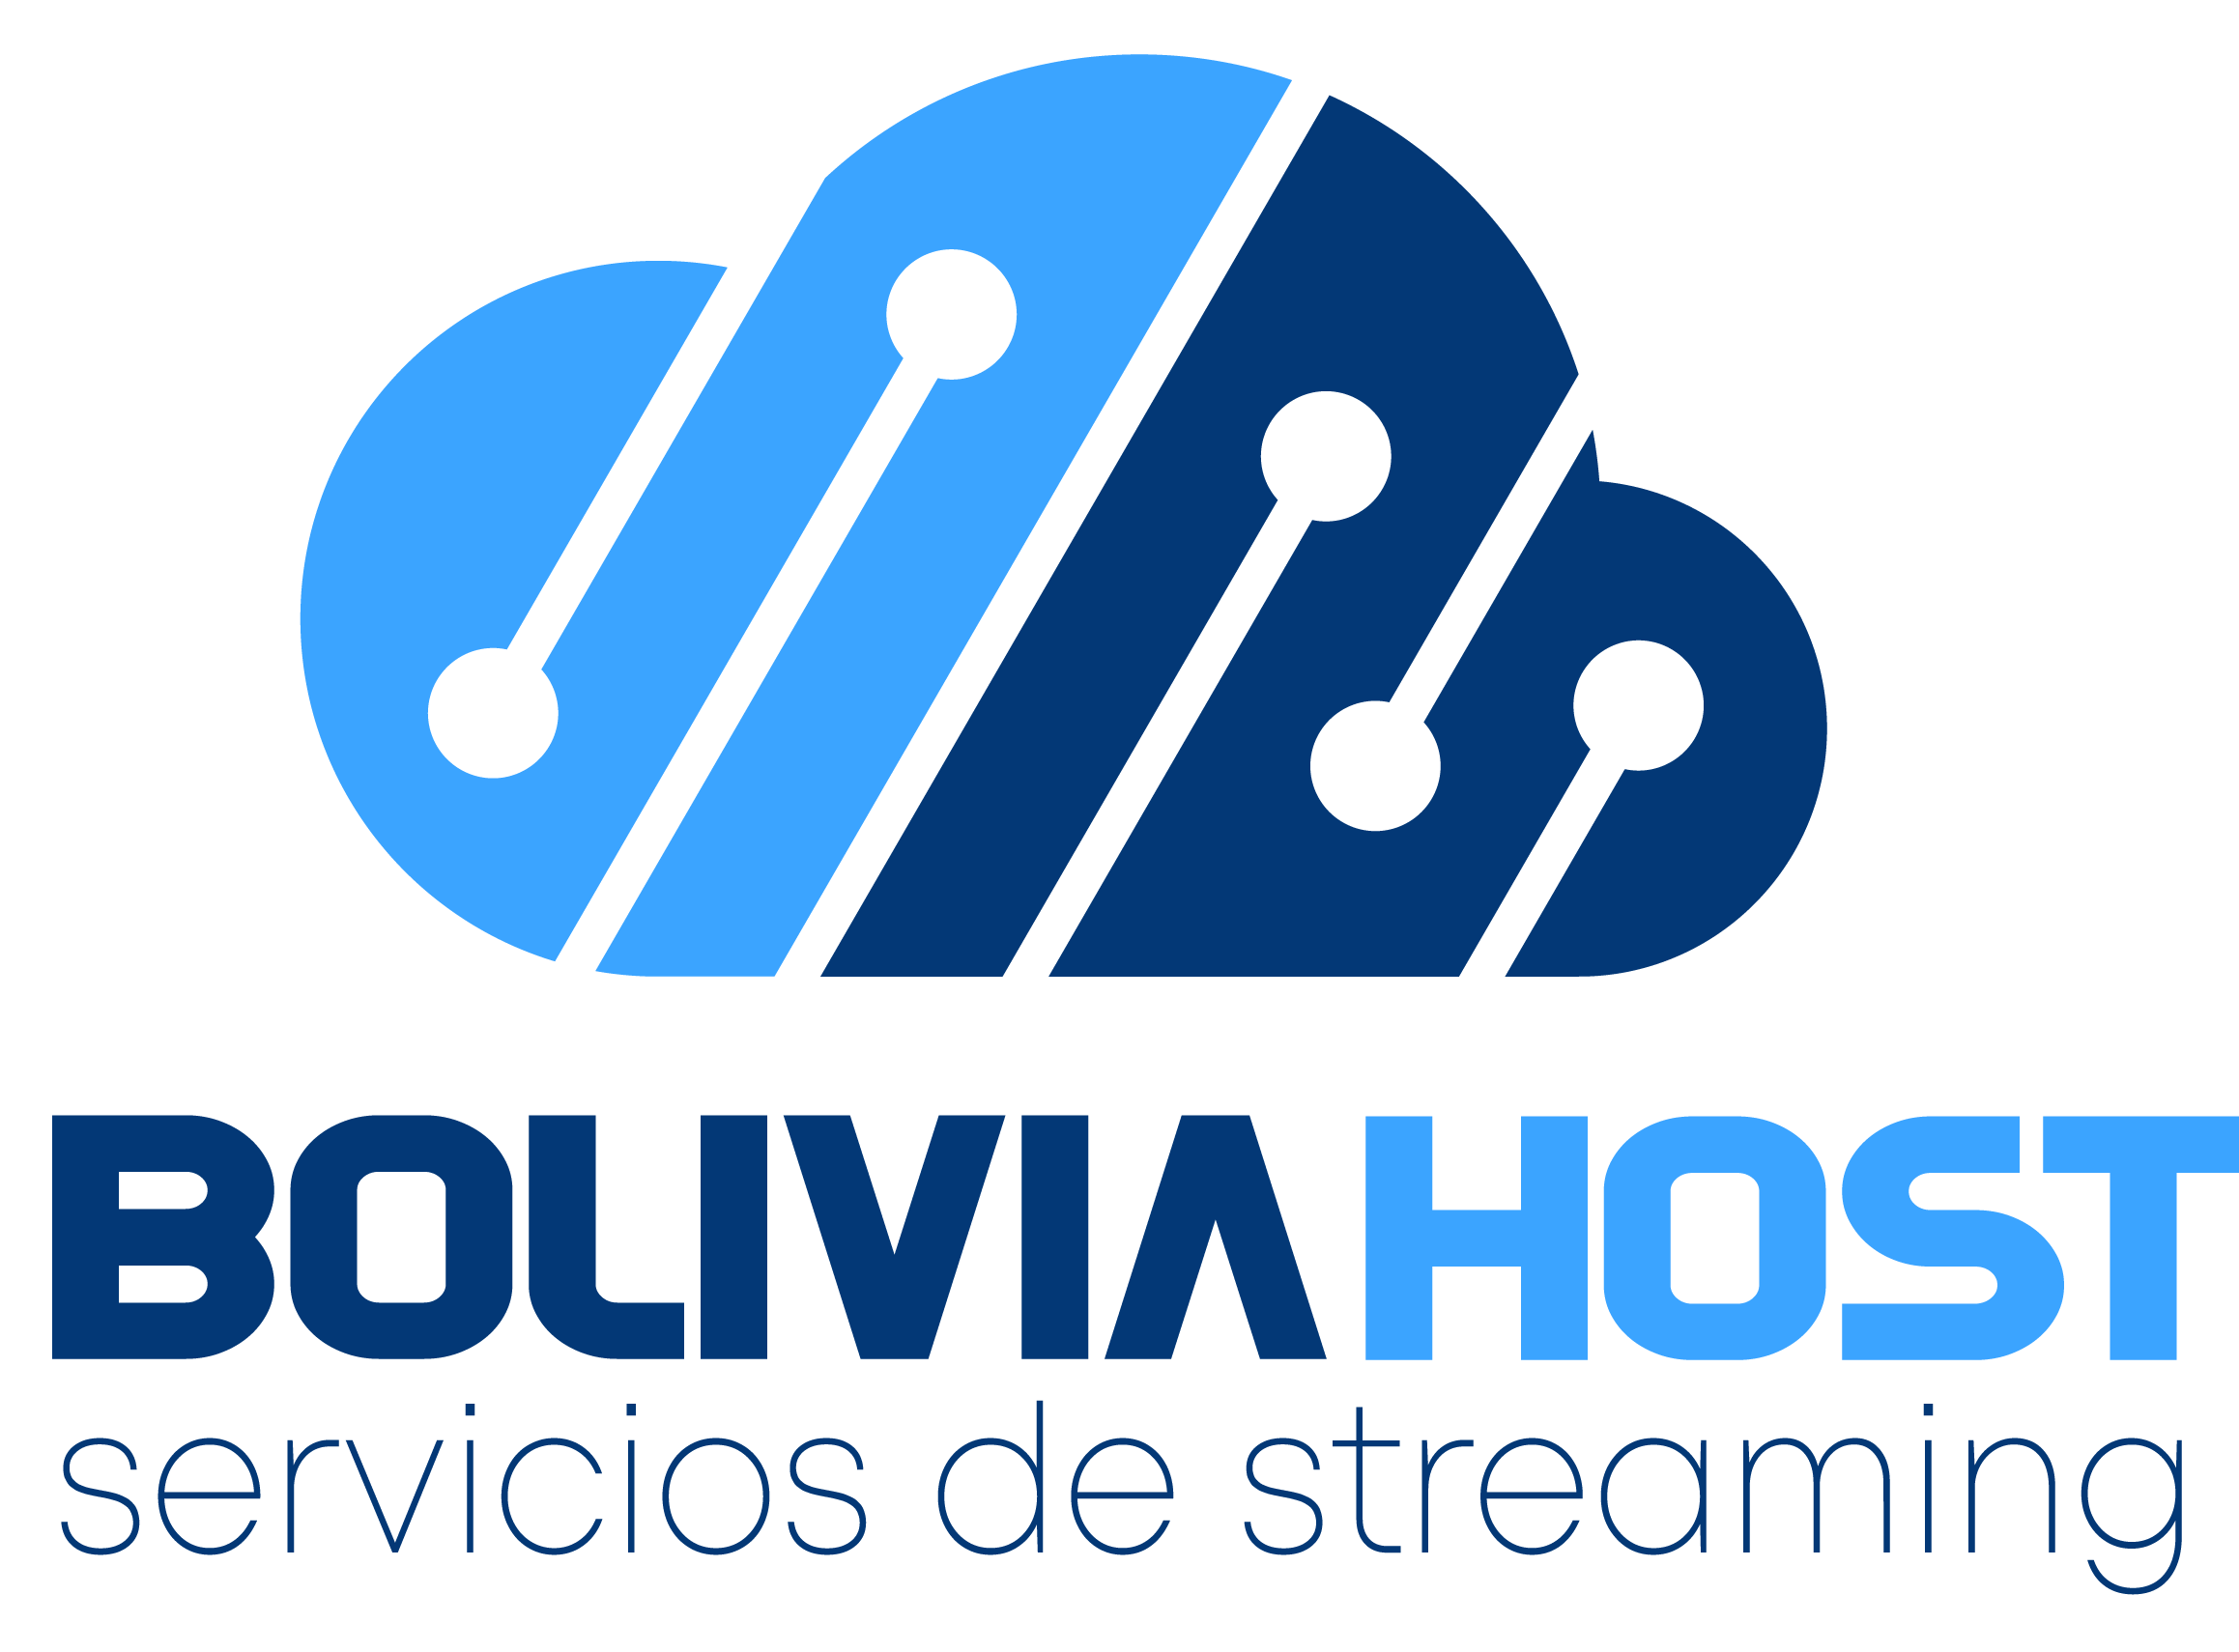 BOLIVIA HOST – AUDIO EN HD MAS BARATO DEL PAIS